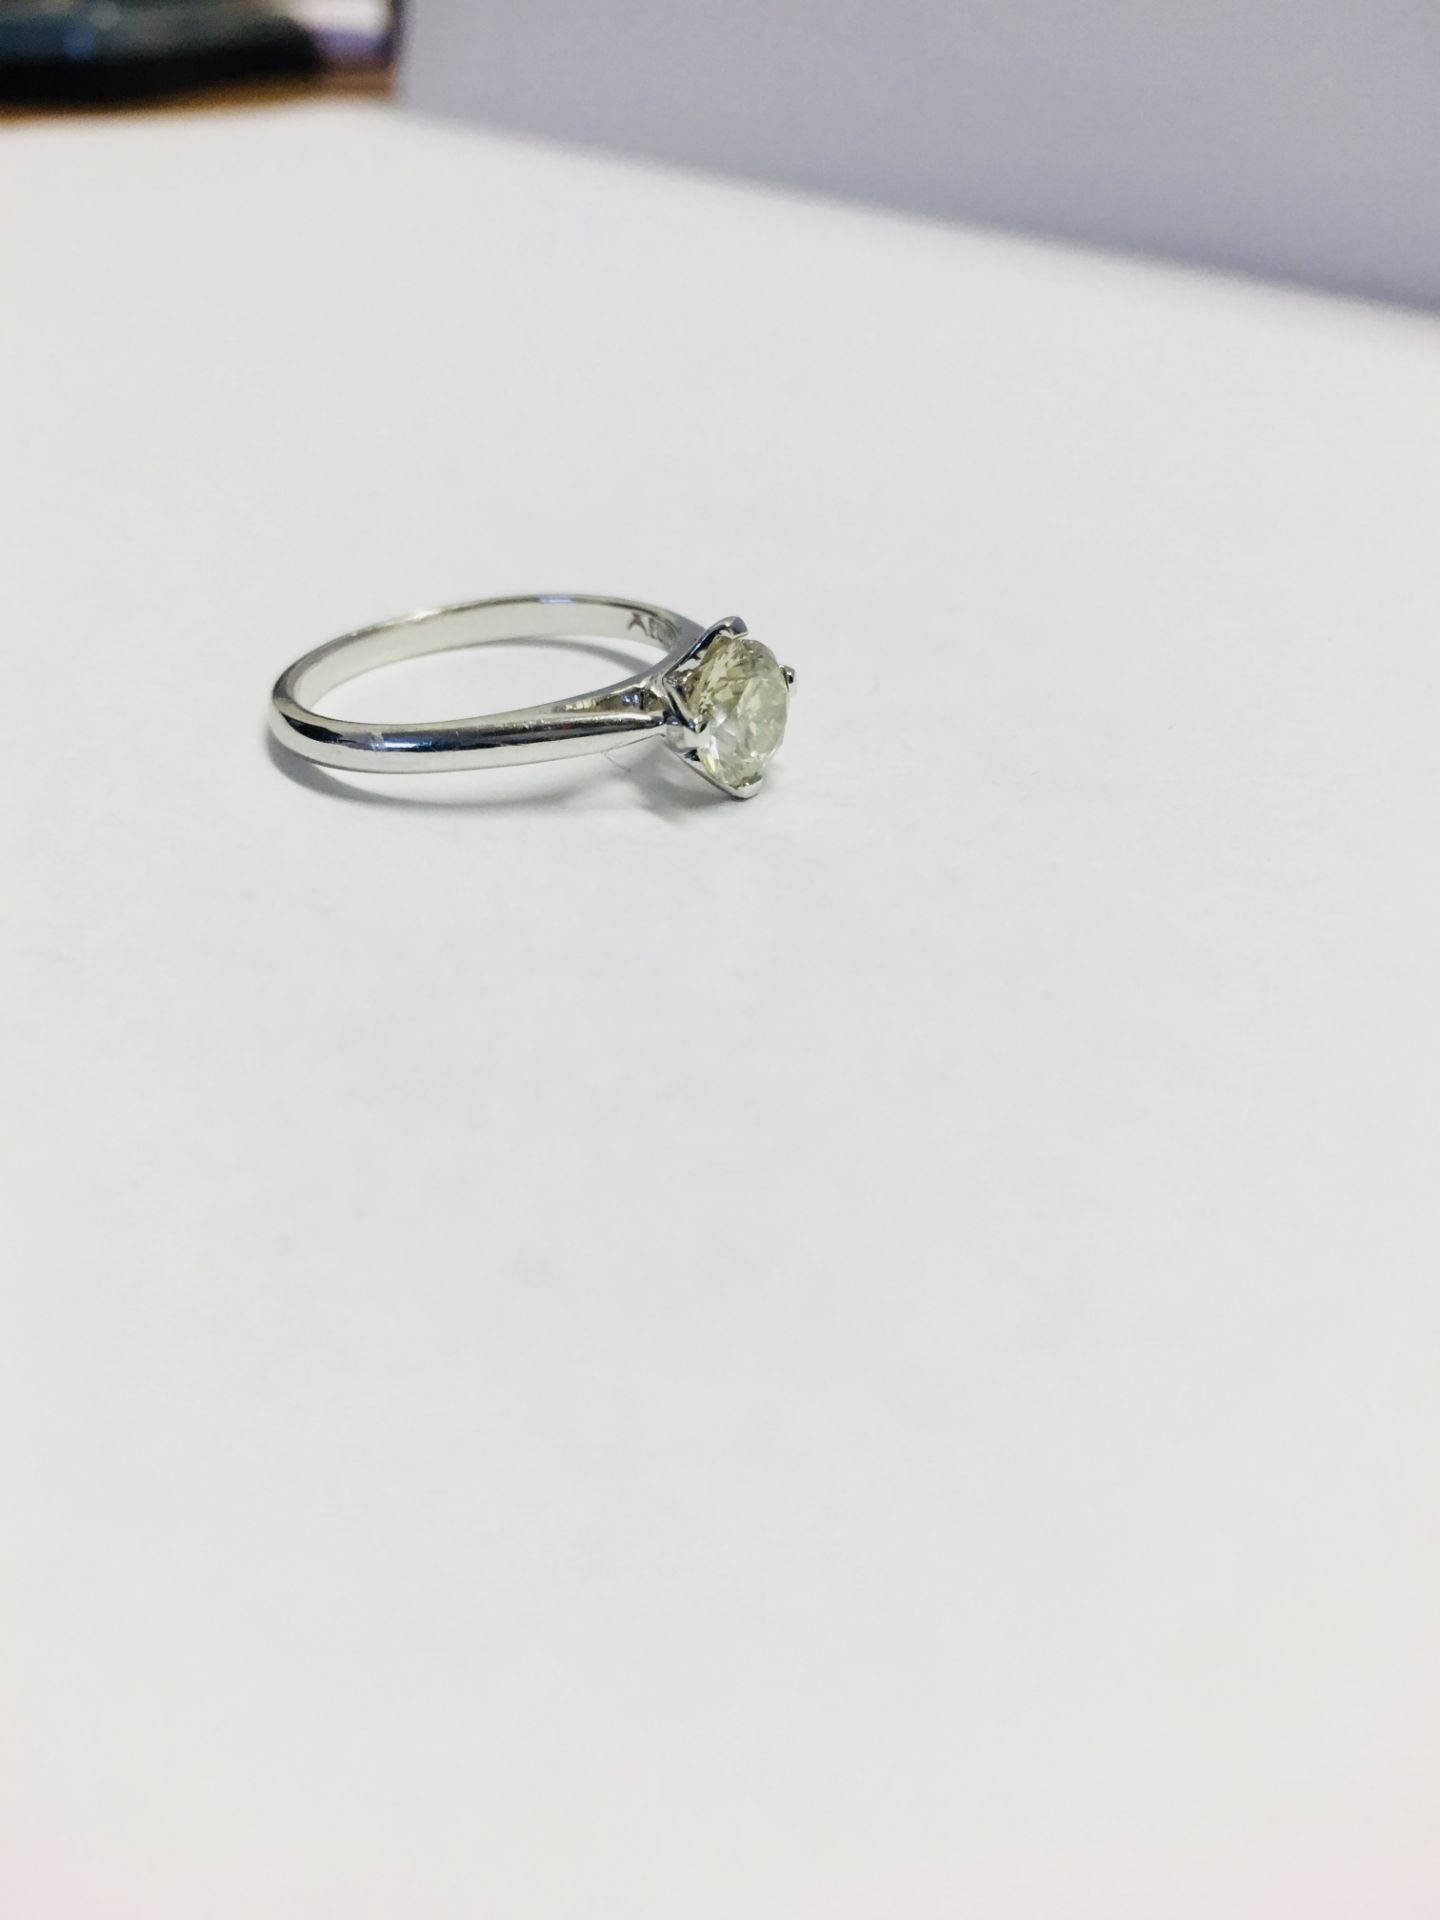 0.87ct Briliant cut diamond,J colour si2 clarity,Platinum setting,uk London hallmark,950,uk size K, - Image 3 of 4